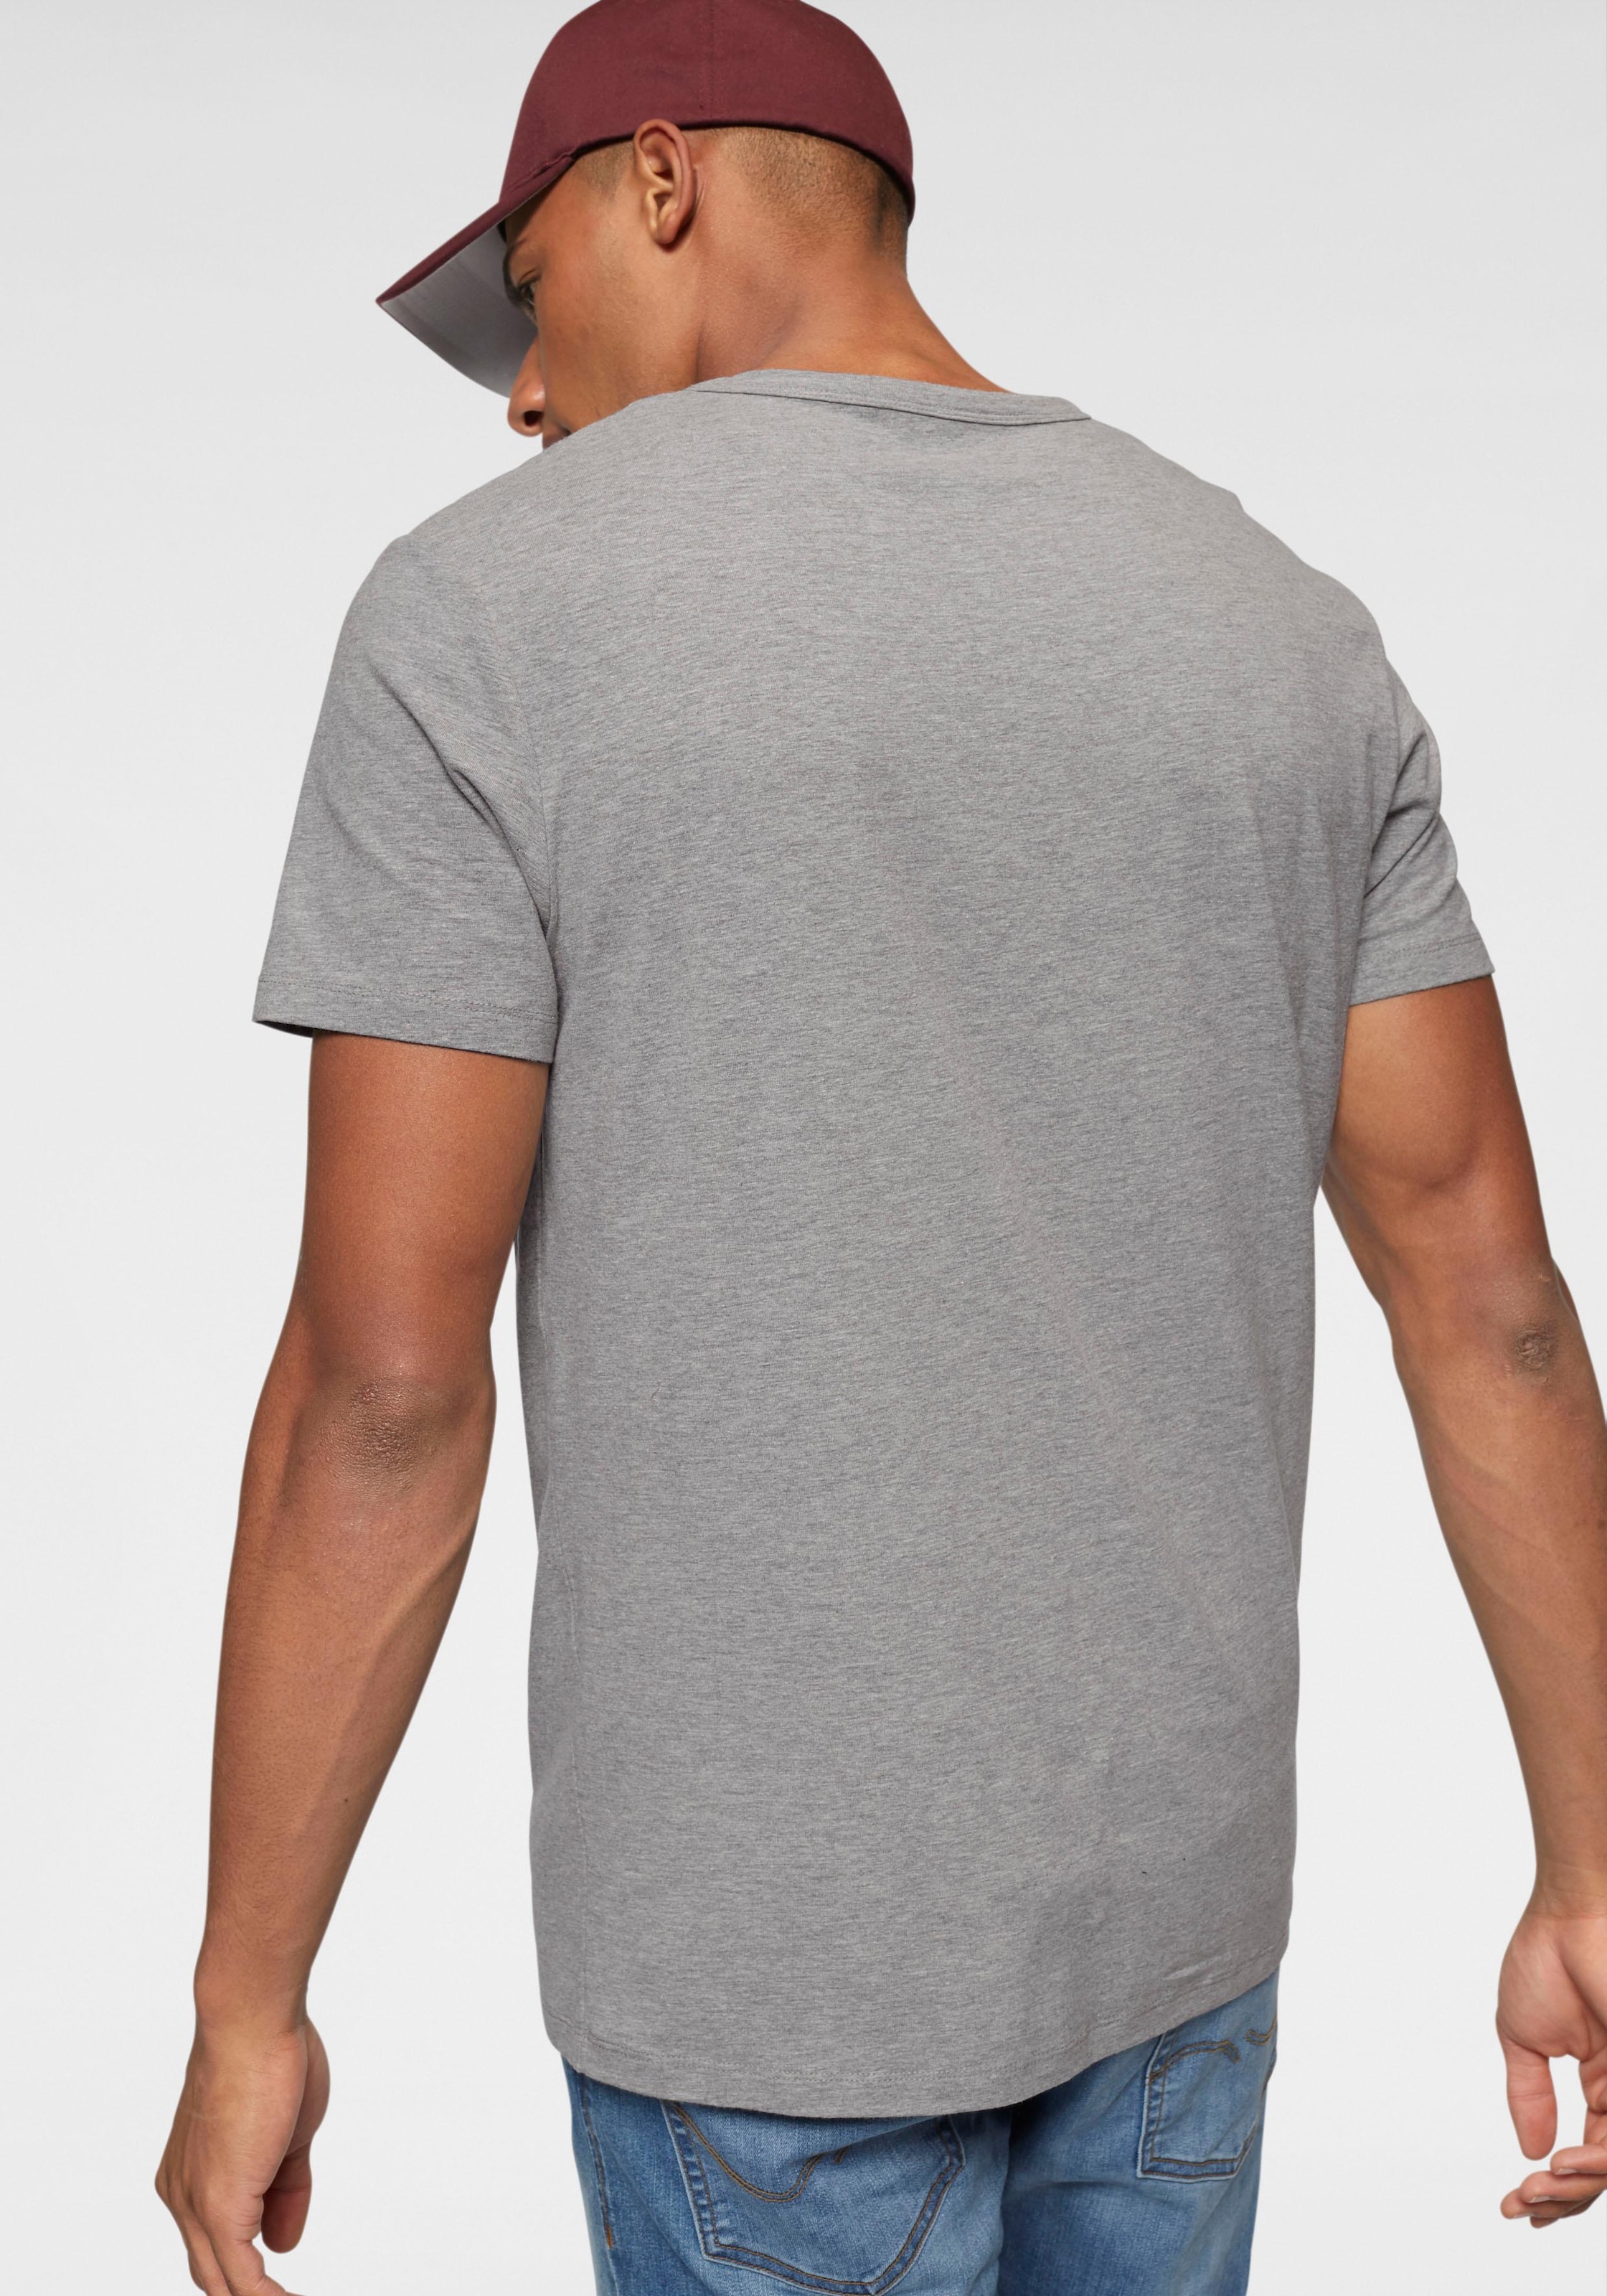 Jack & Jones T-Shirt »SLIM- FIT BASIC TEE V-NECK«, mit V-Ausschnitt